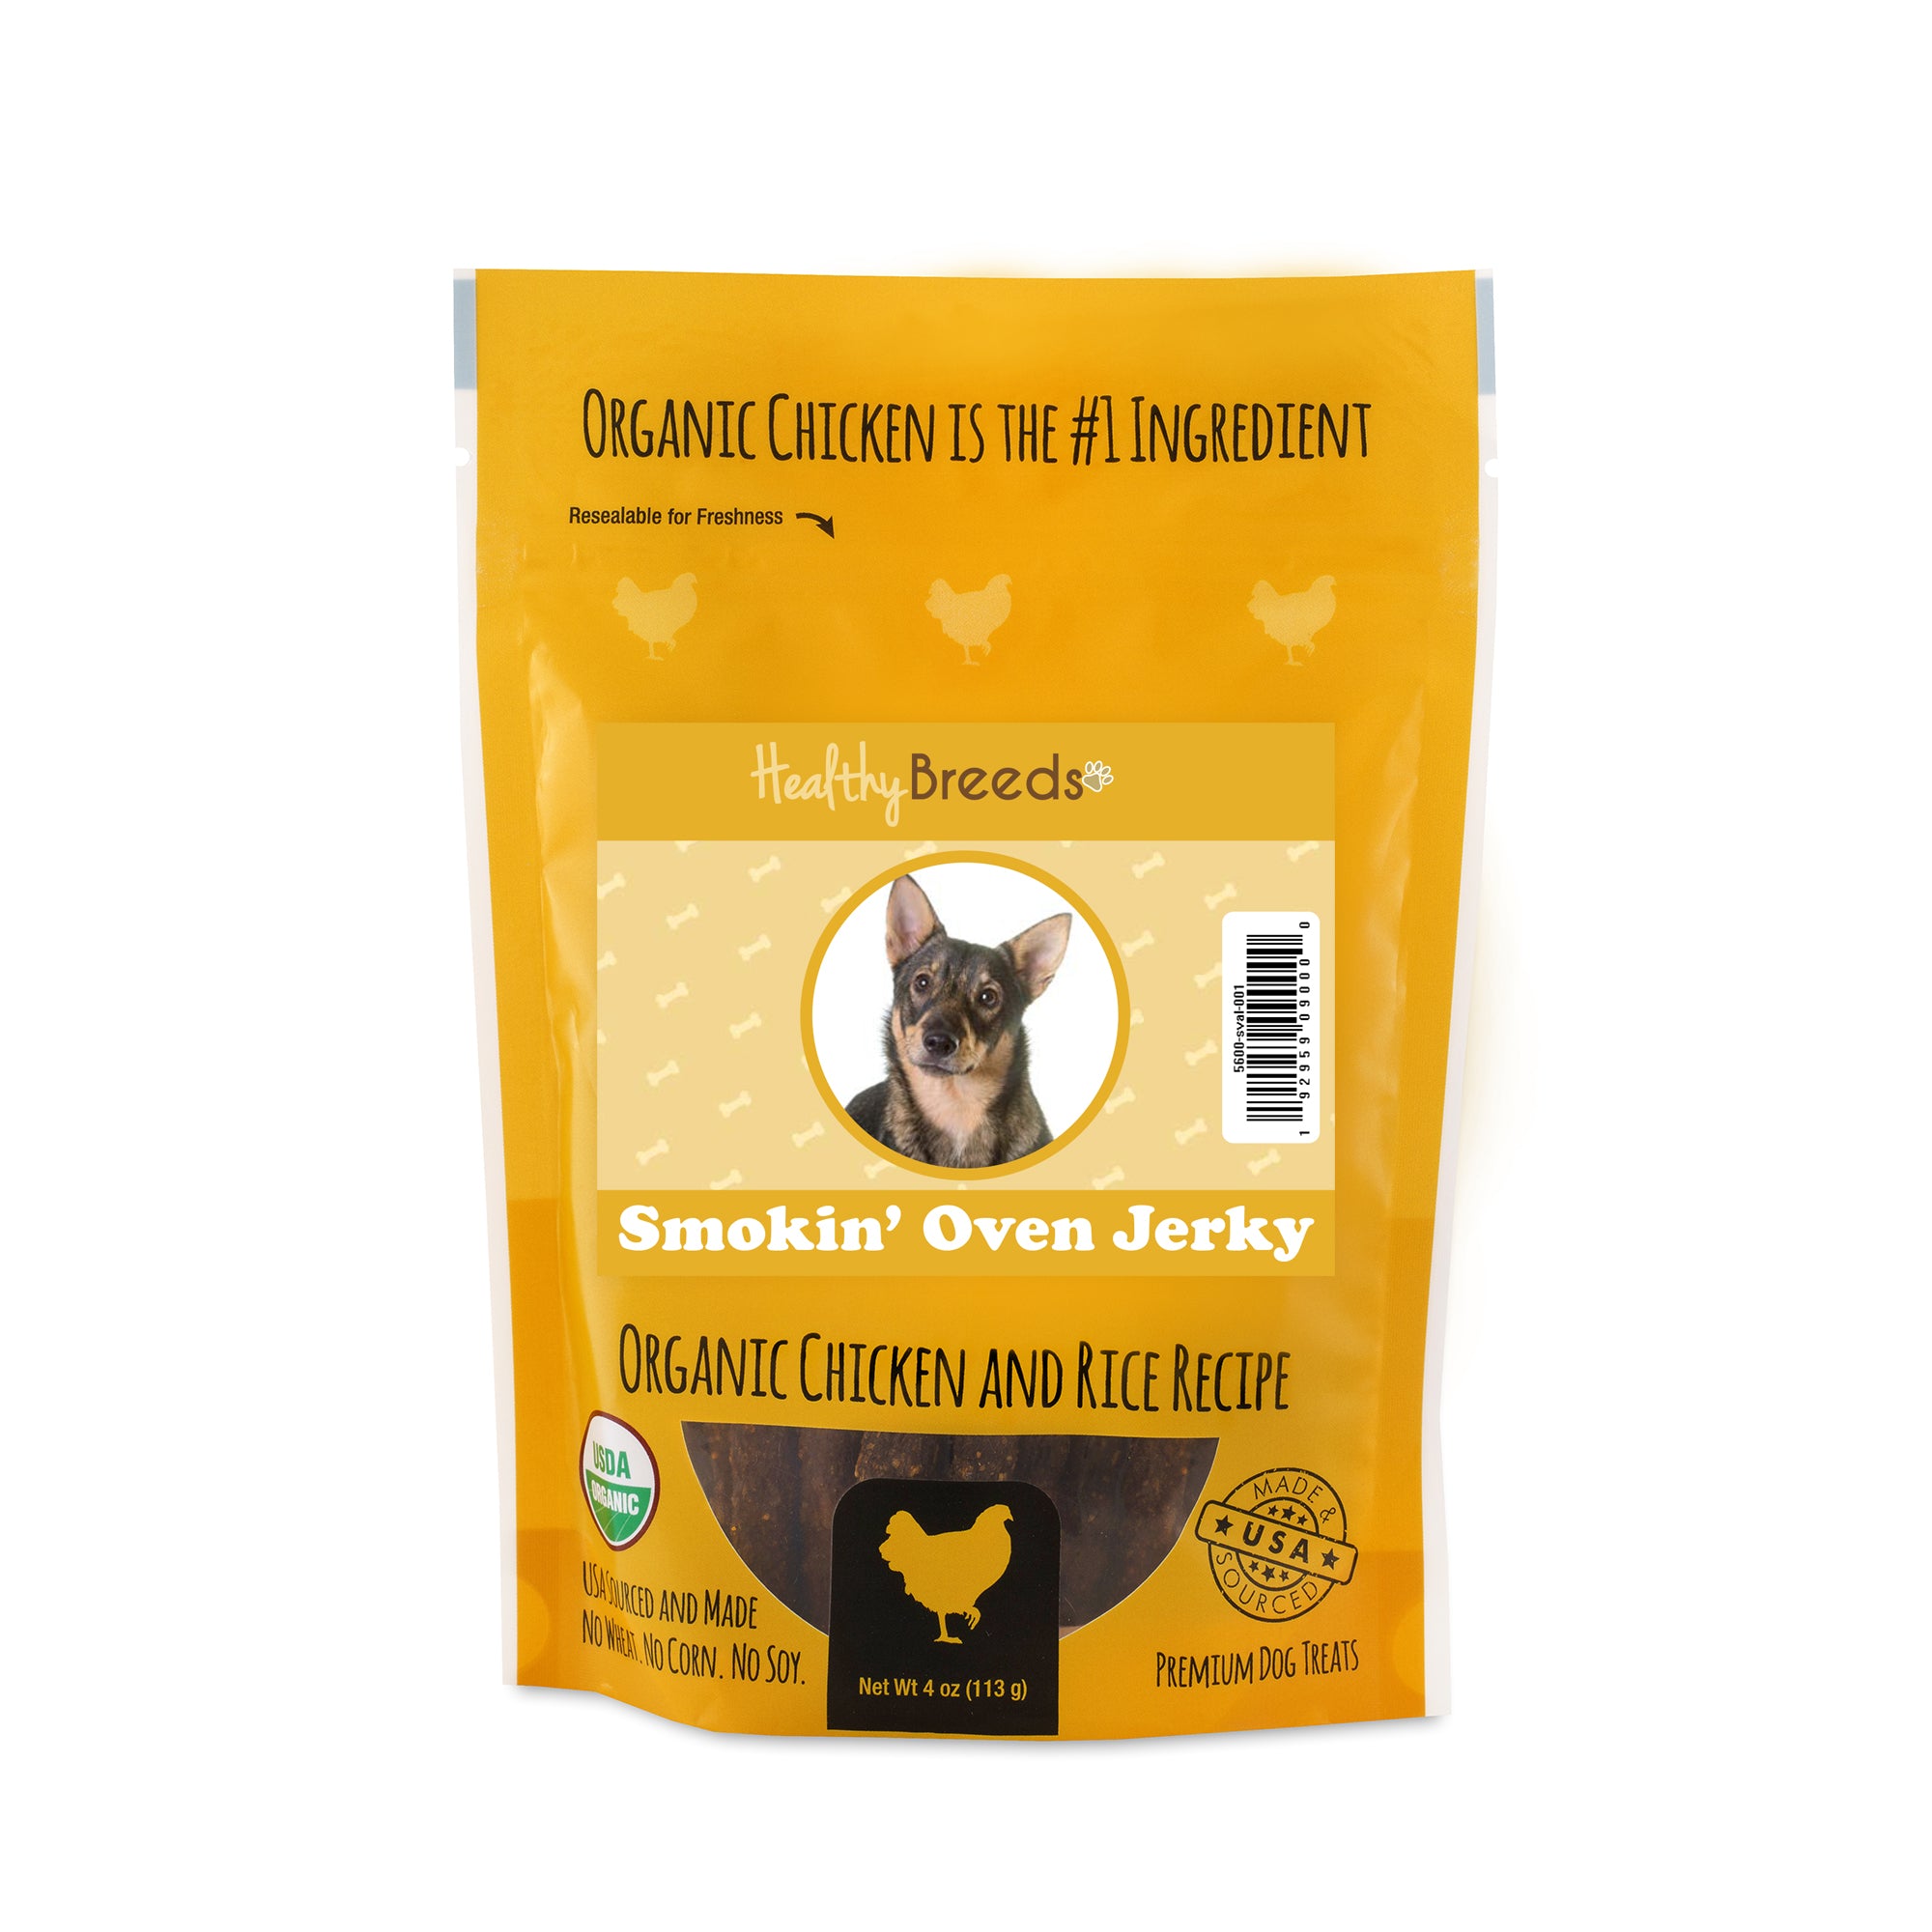 Swedish Vallhund Smokin' Oven Organic Chicken & Rice Recipe Jerky Dog Treats 4 oz